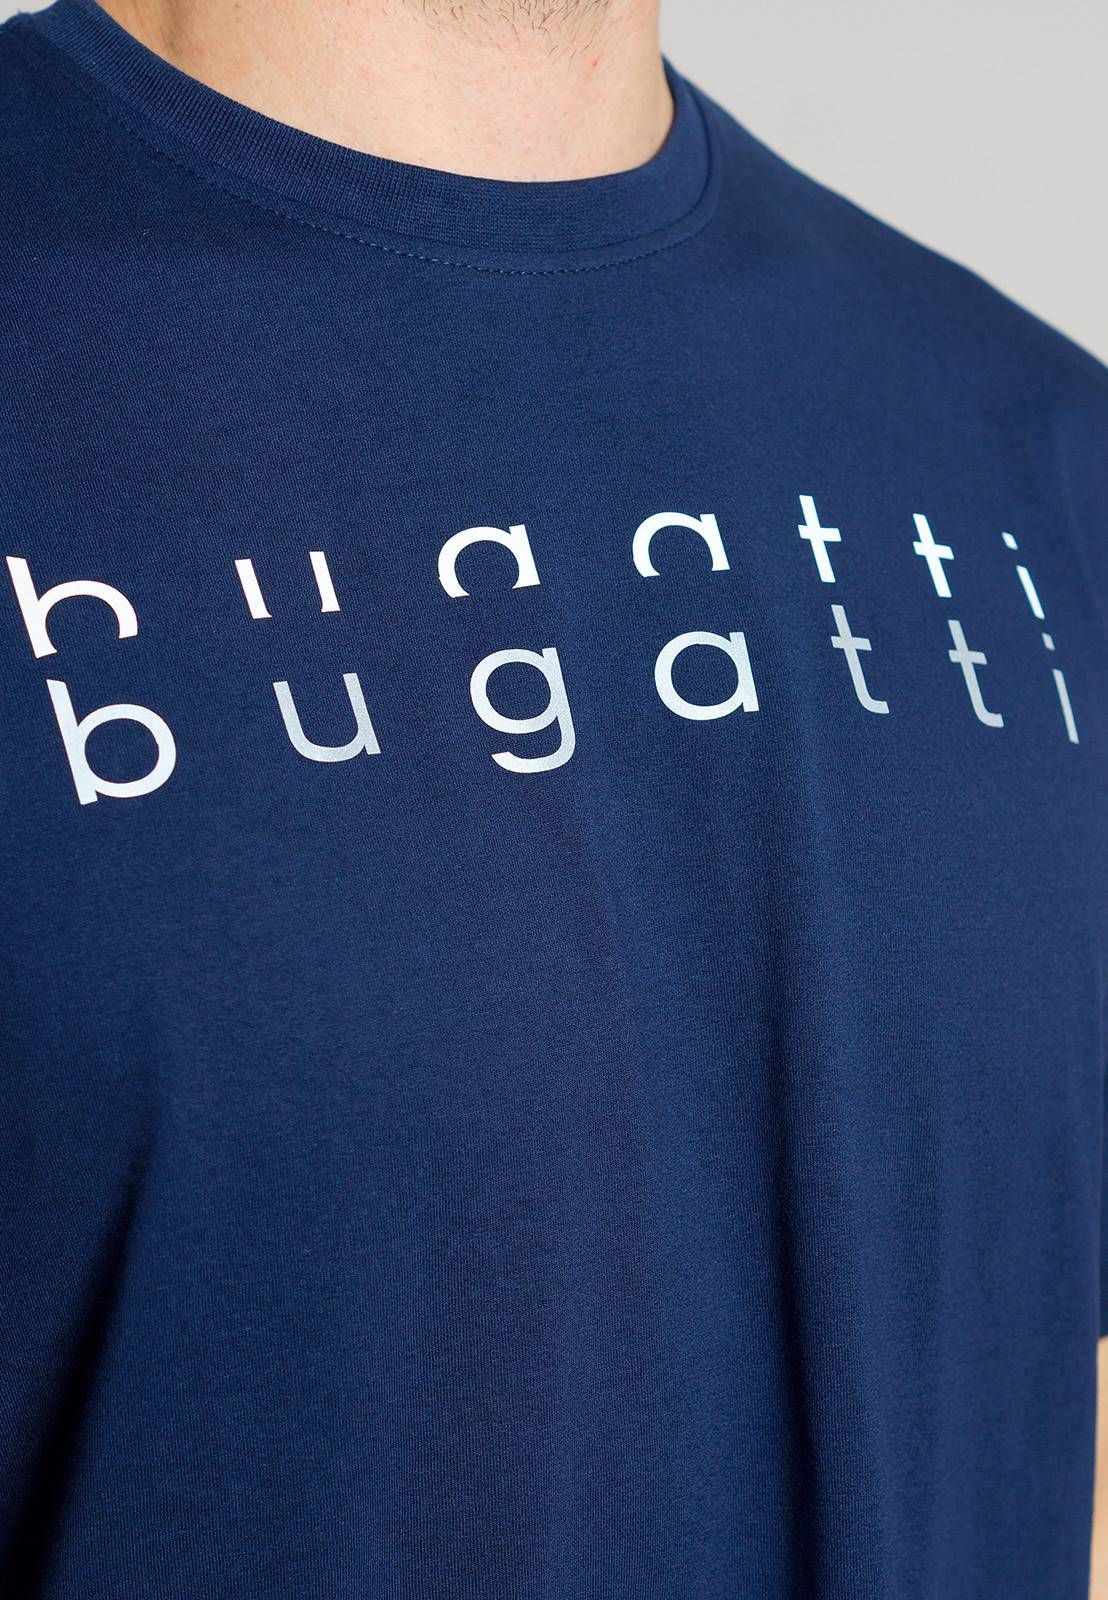 Мужская футболка Bugatti 54069 6074 630 Темно-синий 48